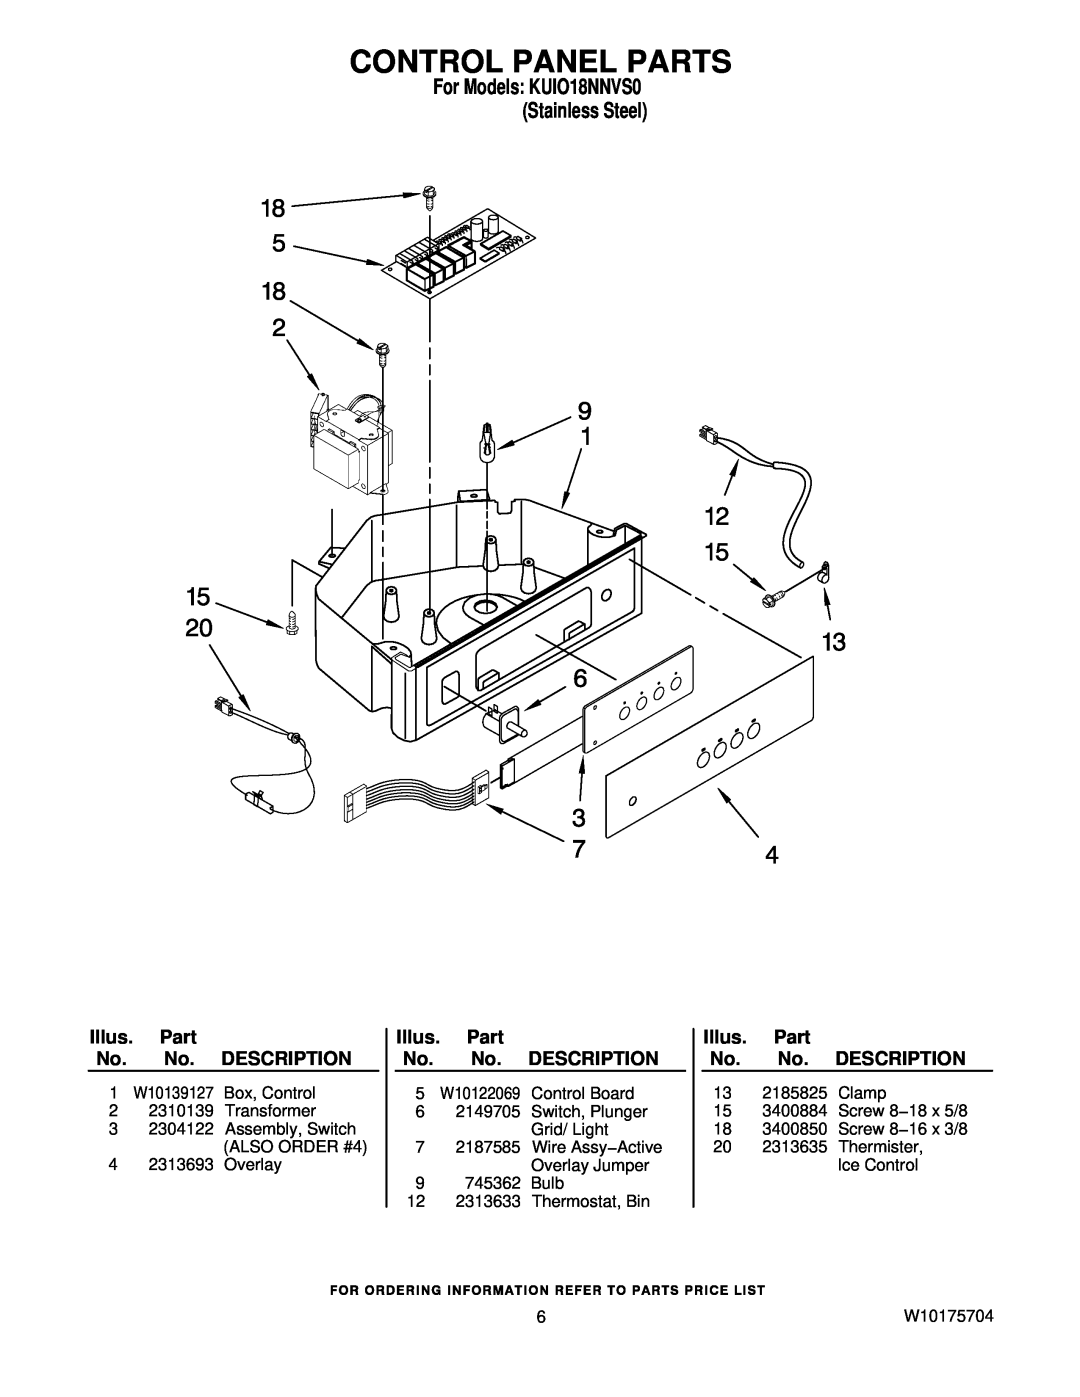 KitchenAid manual Control Panel Parts, For Models KUIO18NNVS0 Stainless Steel, Illus. Part No. No. DESCRIPTION 